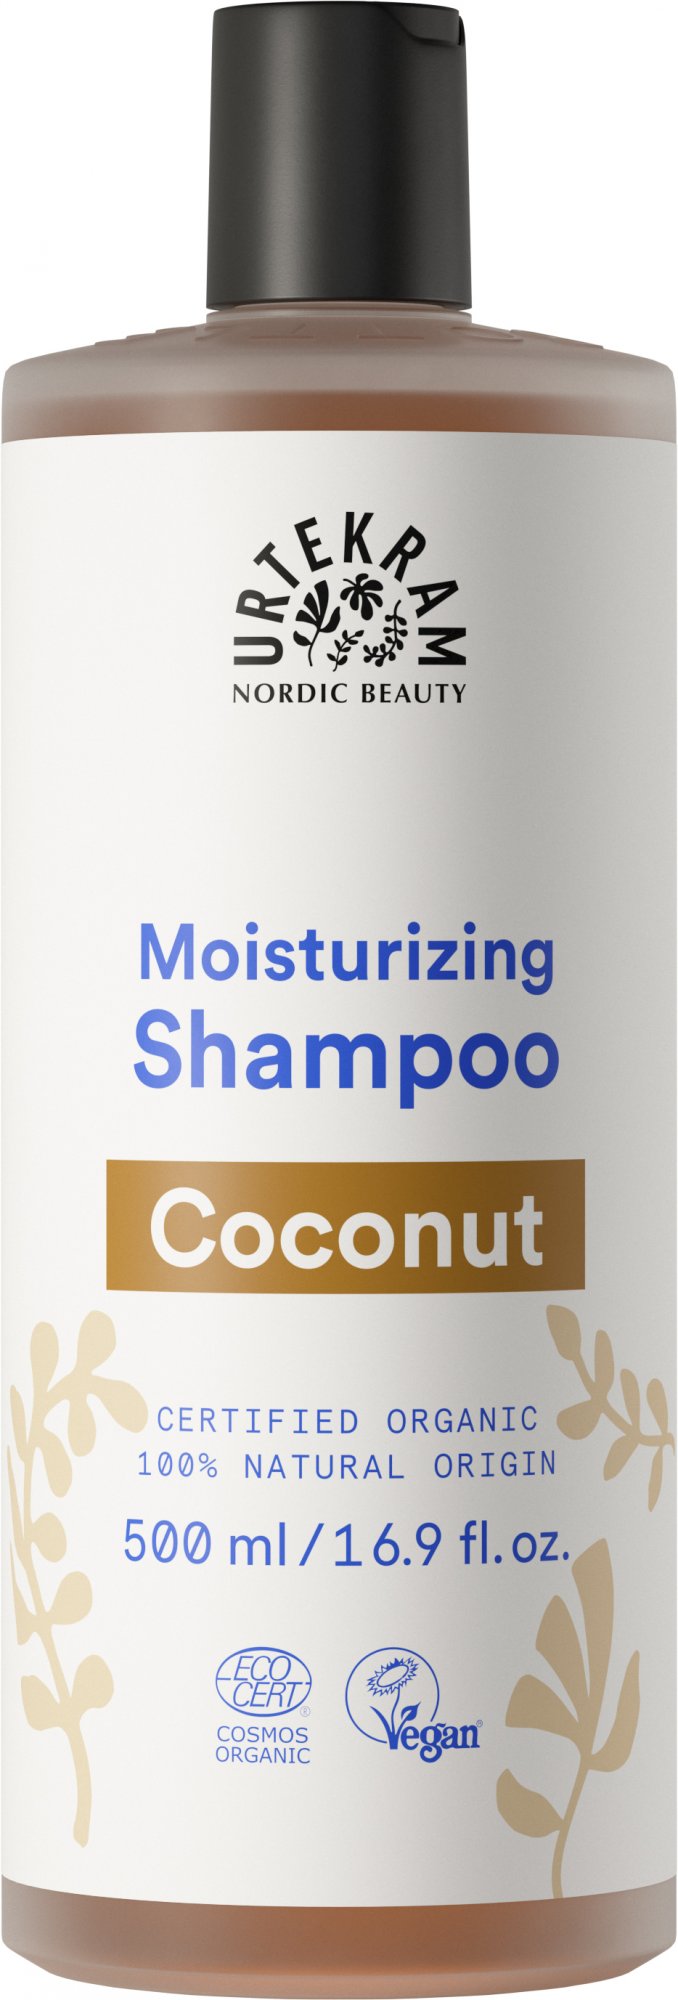 Urtekram Hydratační šampon s kokosovým nektarem BIO 500 ml Urtekram